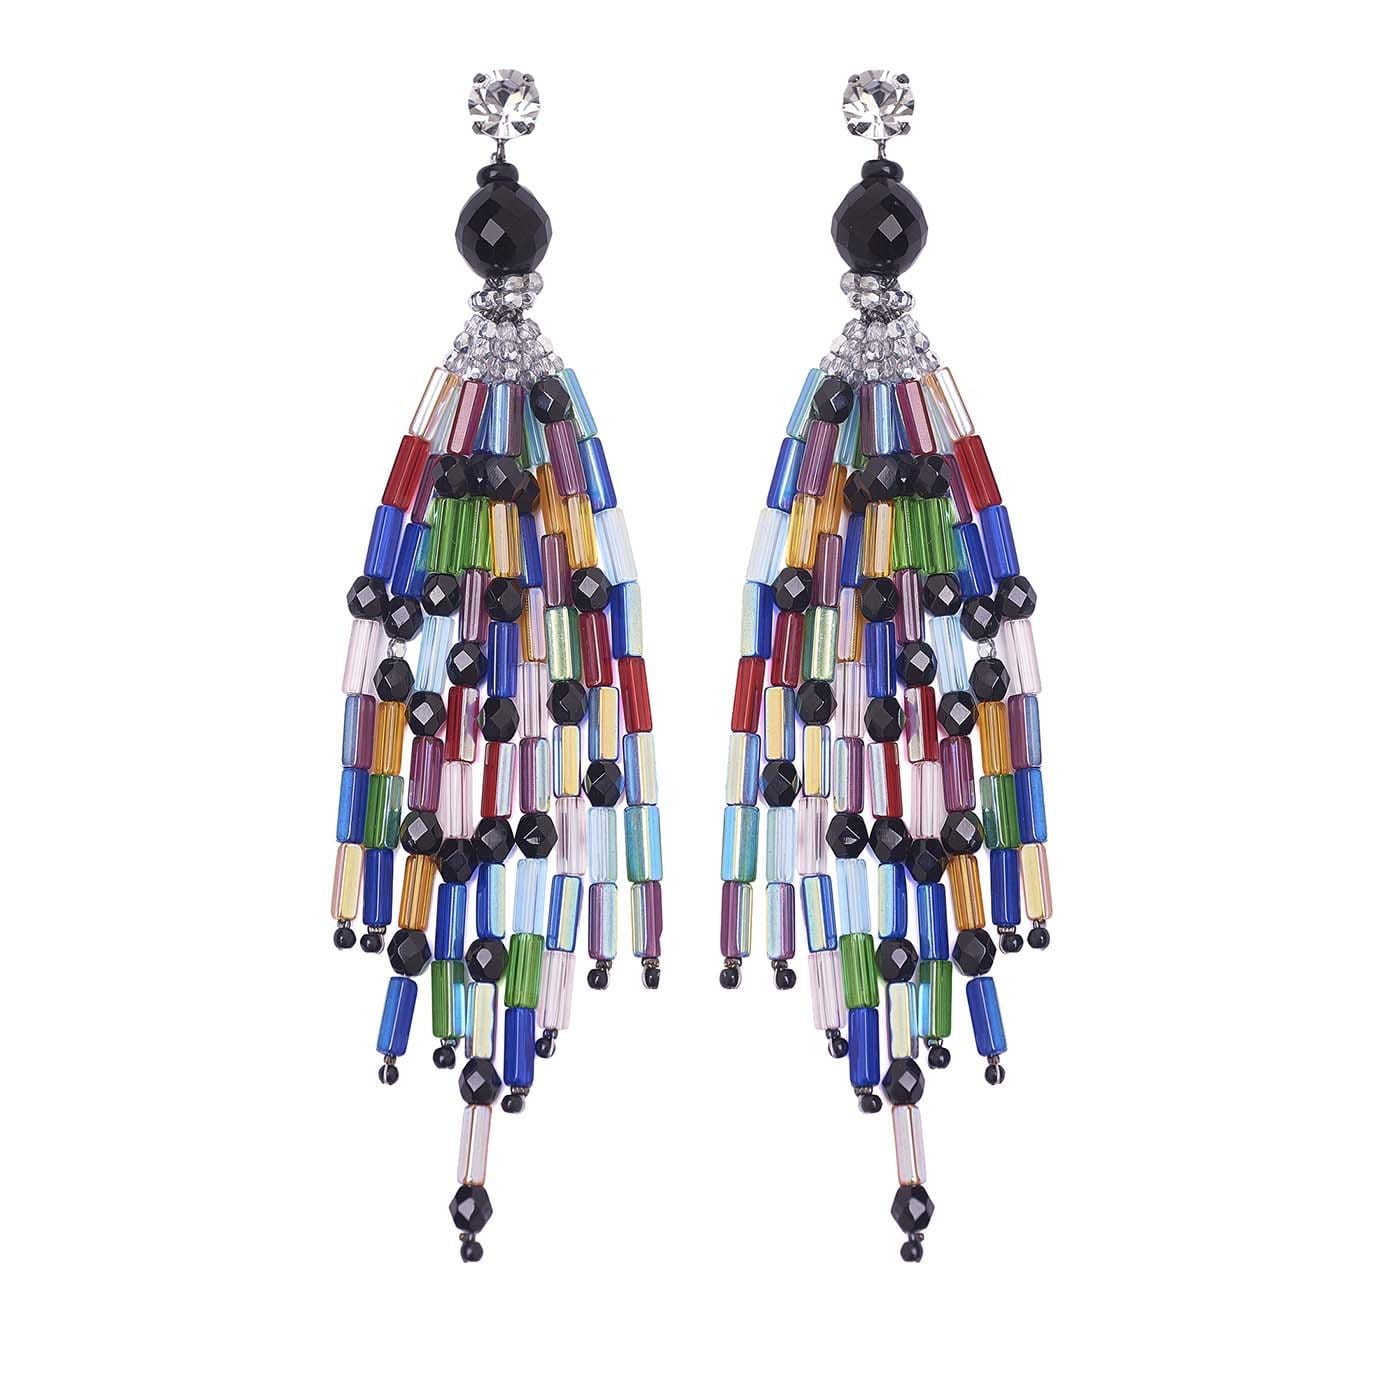 Firefly Multi-color Earrings - Sharra Pagano